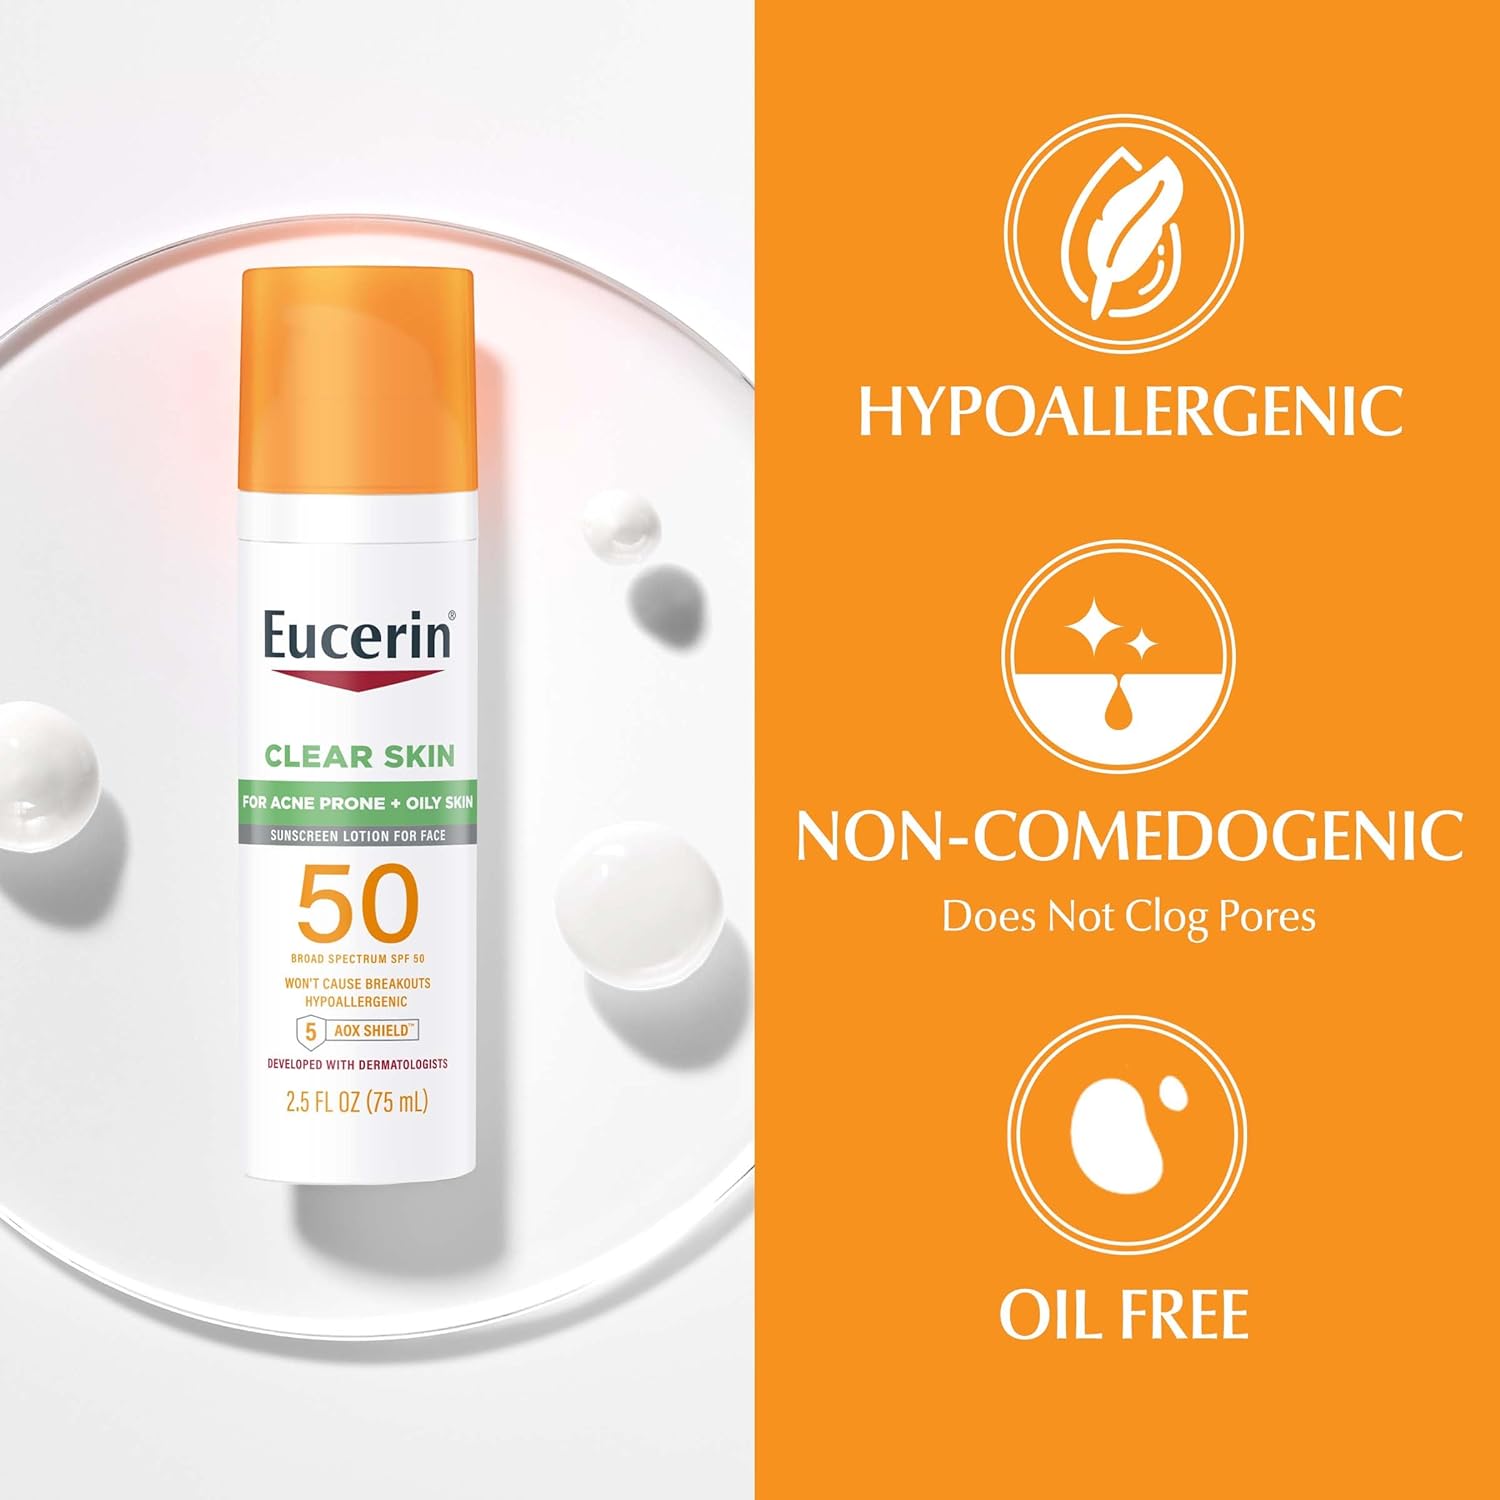 Clear Skin for Acne Prone + Oily Skin, SPF 50, 2.5 fl oz (75 ml)